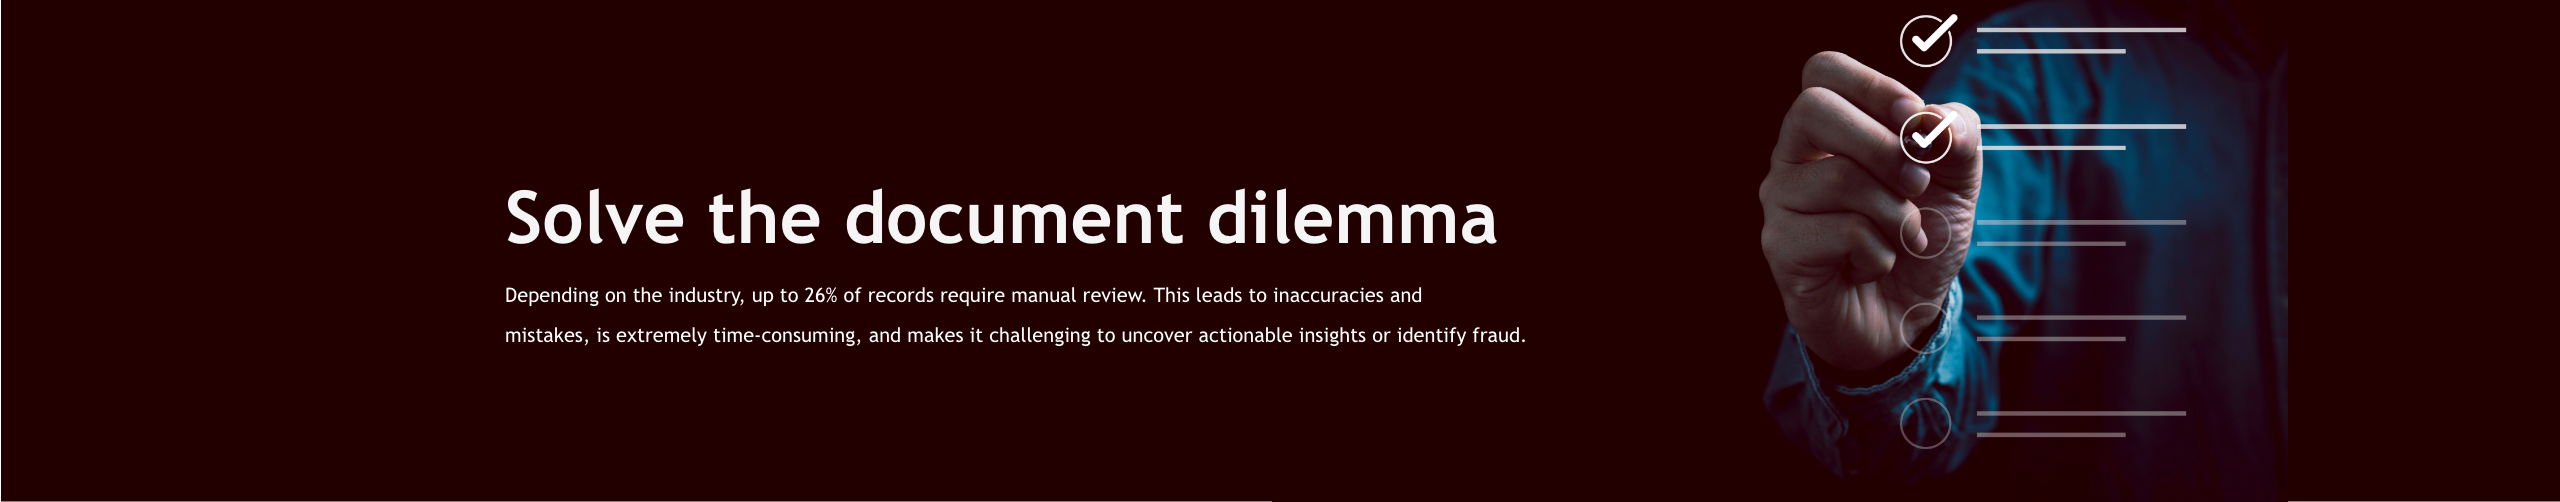 Solve the document dilemma Banner